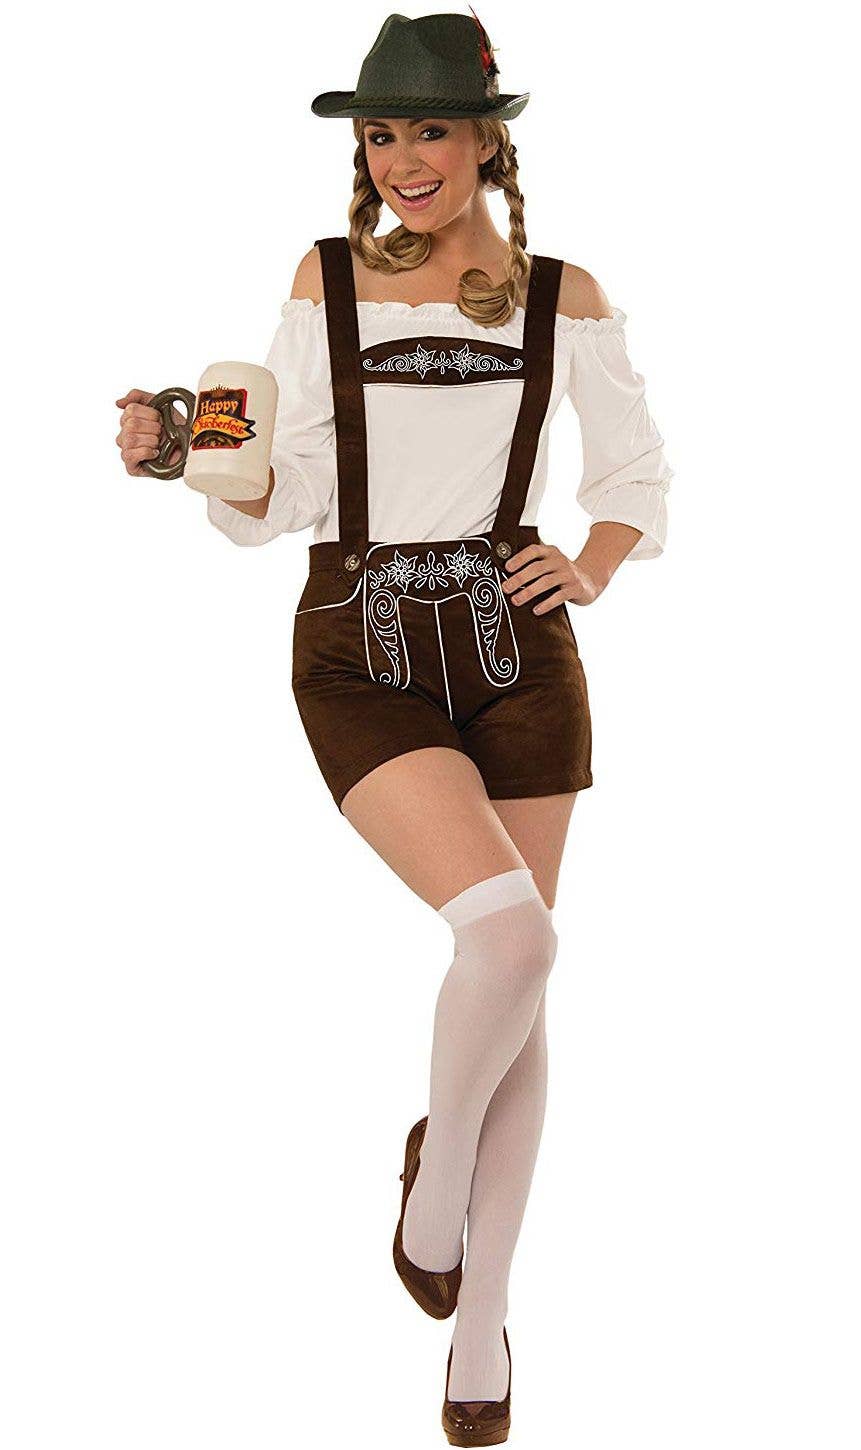 tm-fn-75-781-lederhosen-brown-and-white-sexy-wopmens-oktoberfest-fancy-dress-costume-1400.jpg